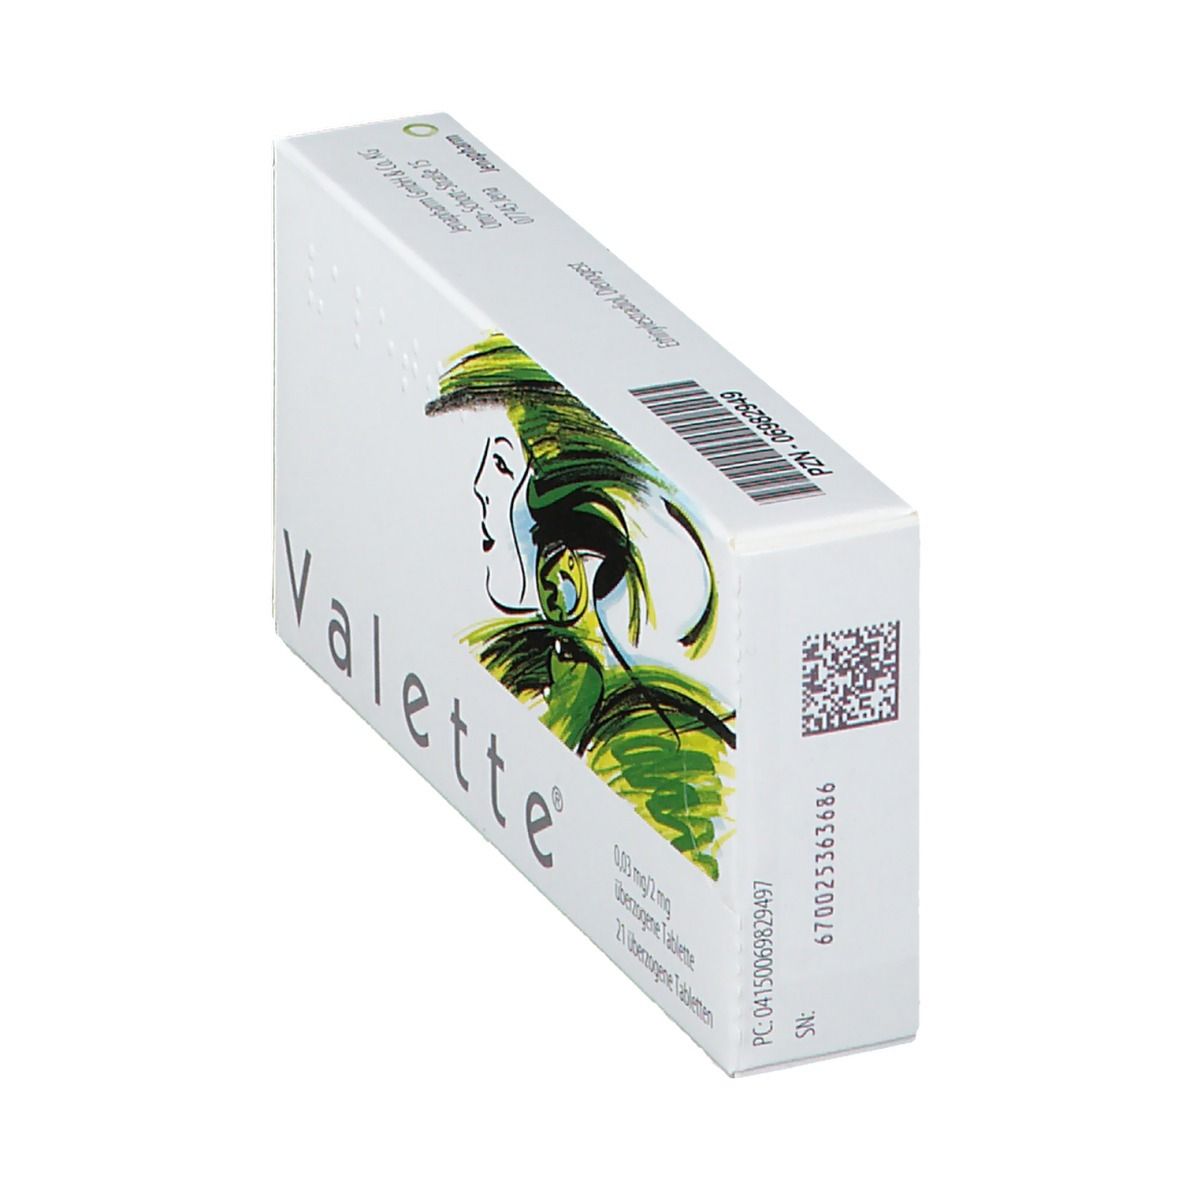 Valette® 0,03 mg/2 mg